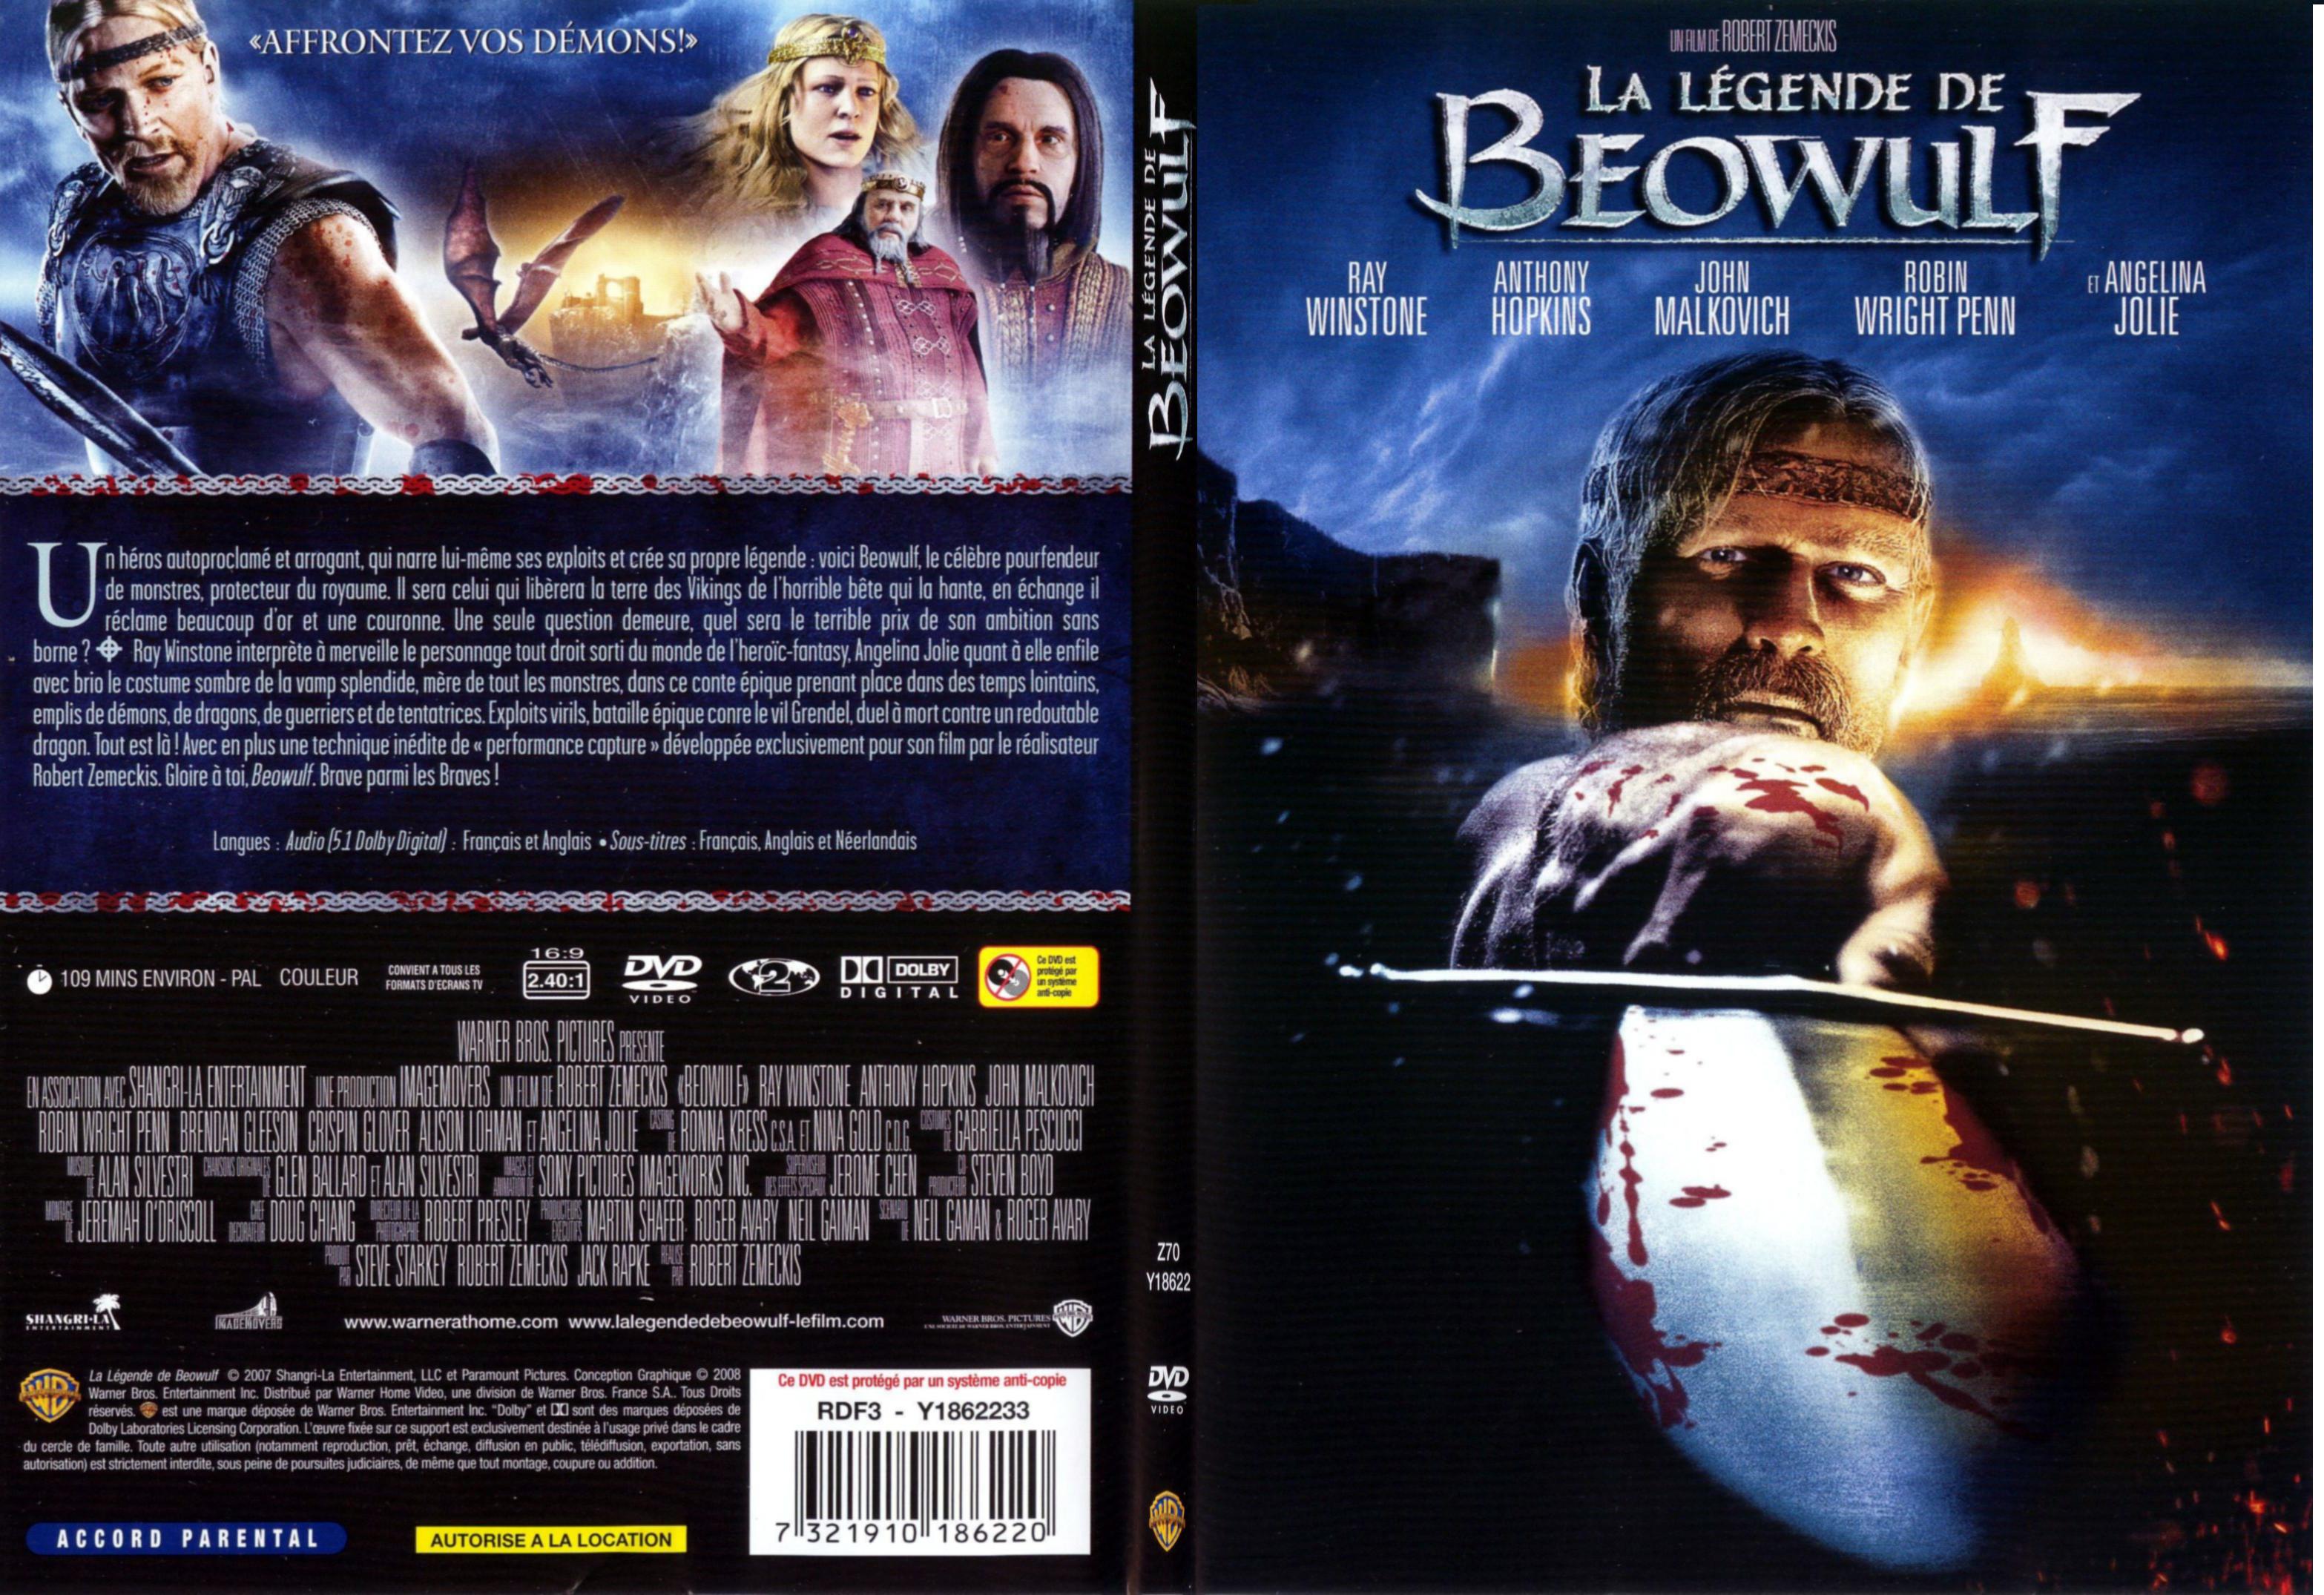 Jaquette DVD La lgende de beowulf - SLIM